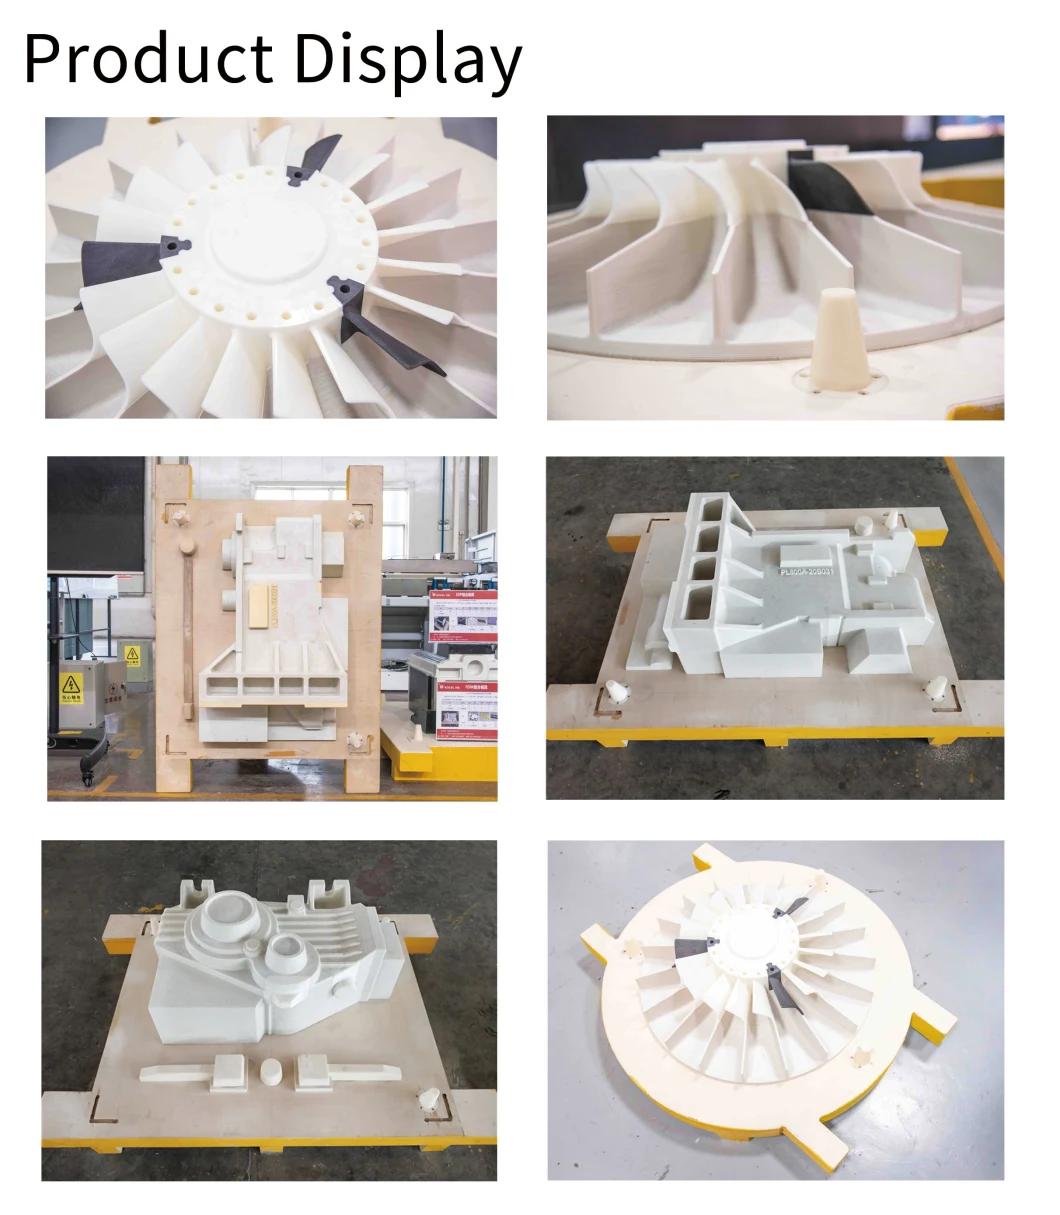 KOCEL Customized FDM Composited Pattern Composite Mould by 3D Printer